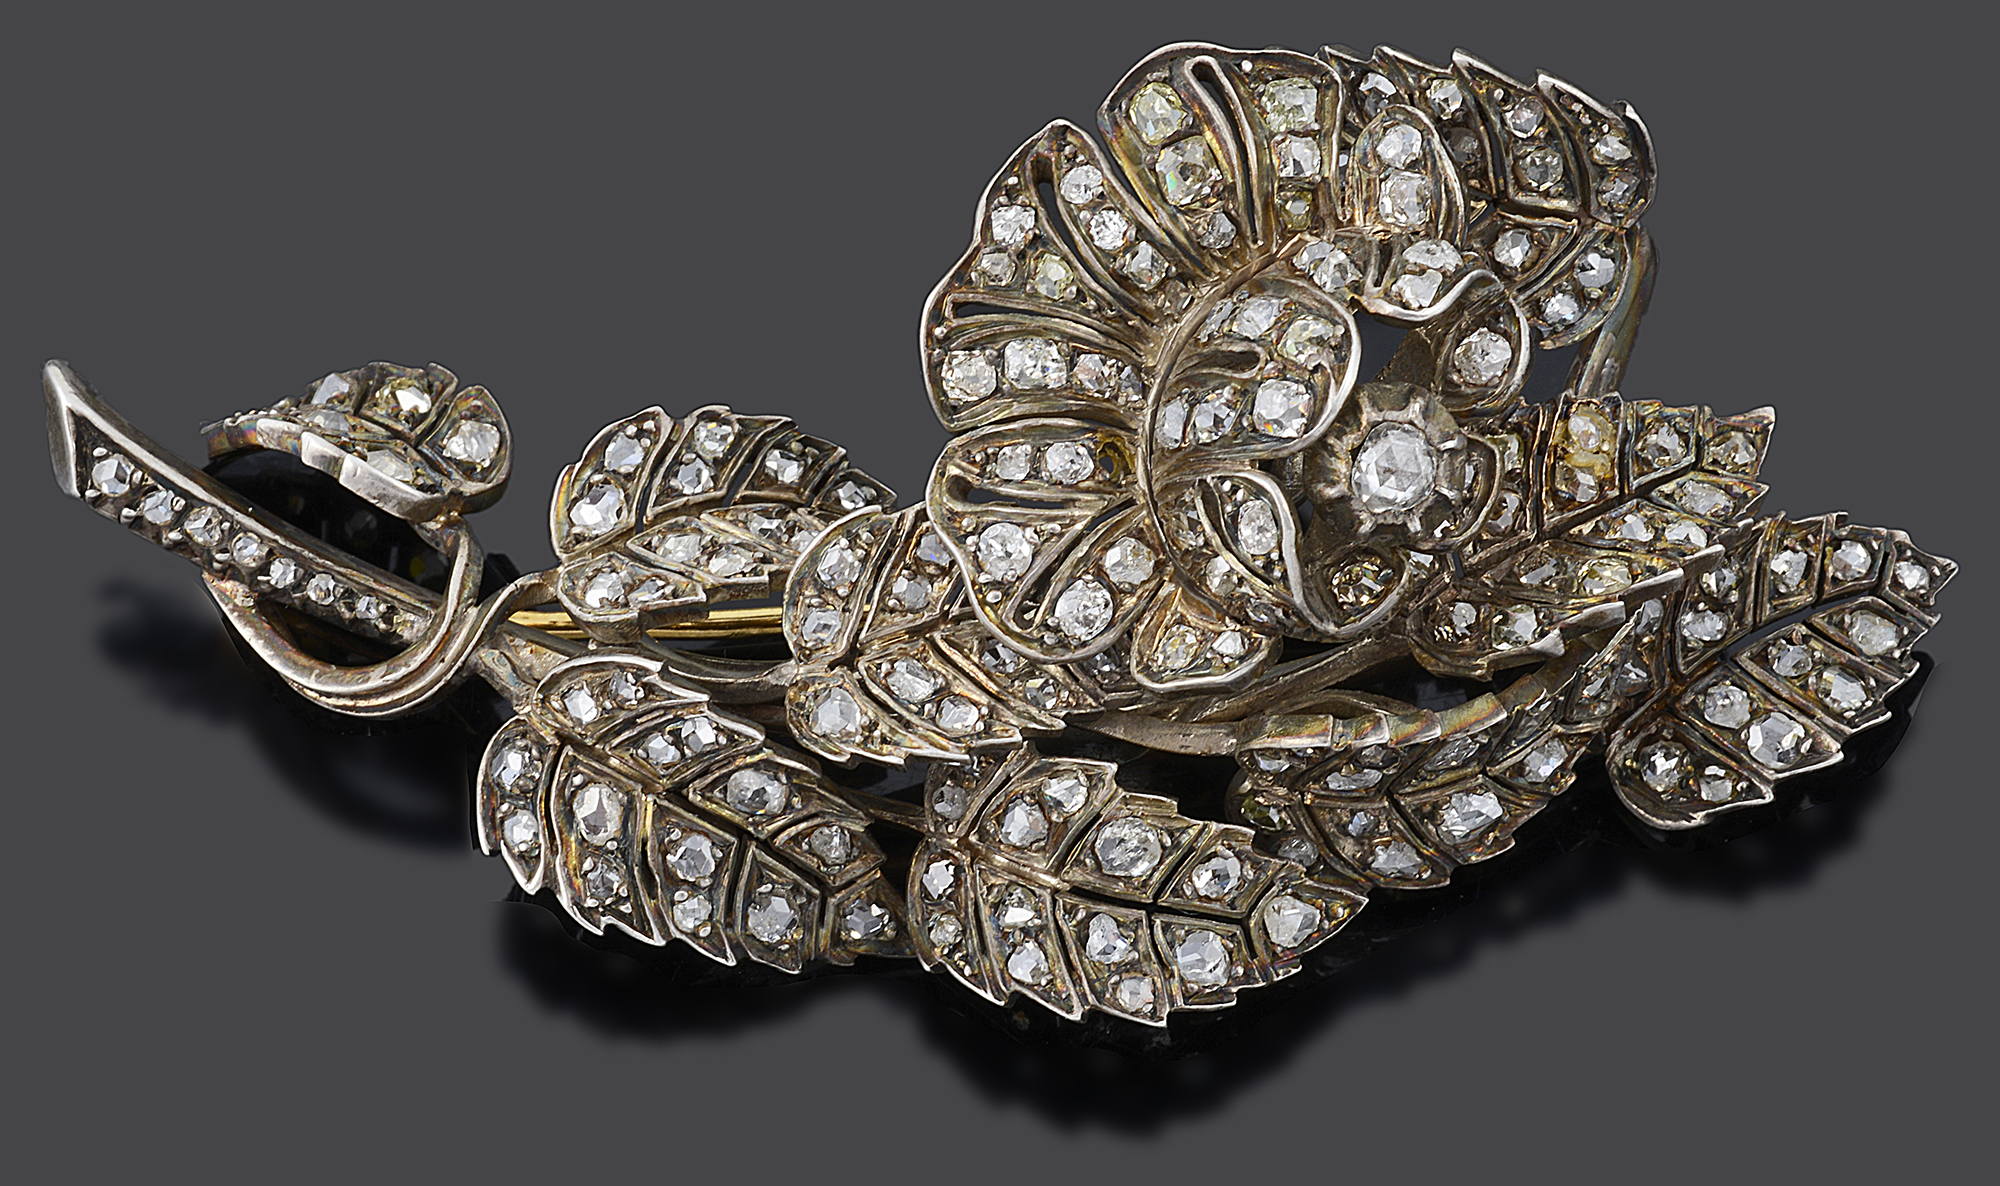 A large 19th Century en tremblant diamond set rose brooch